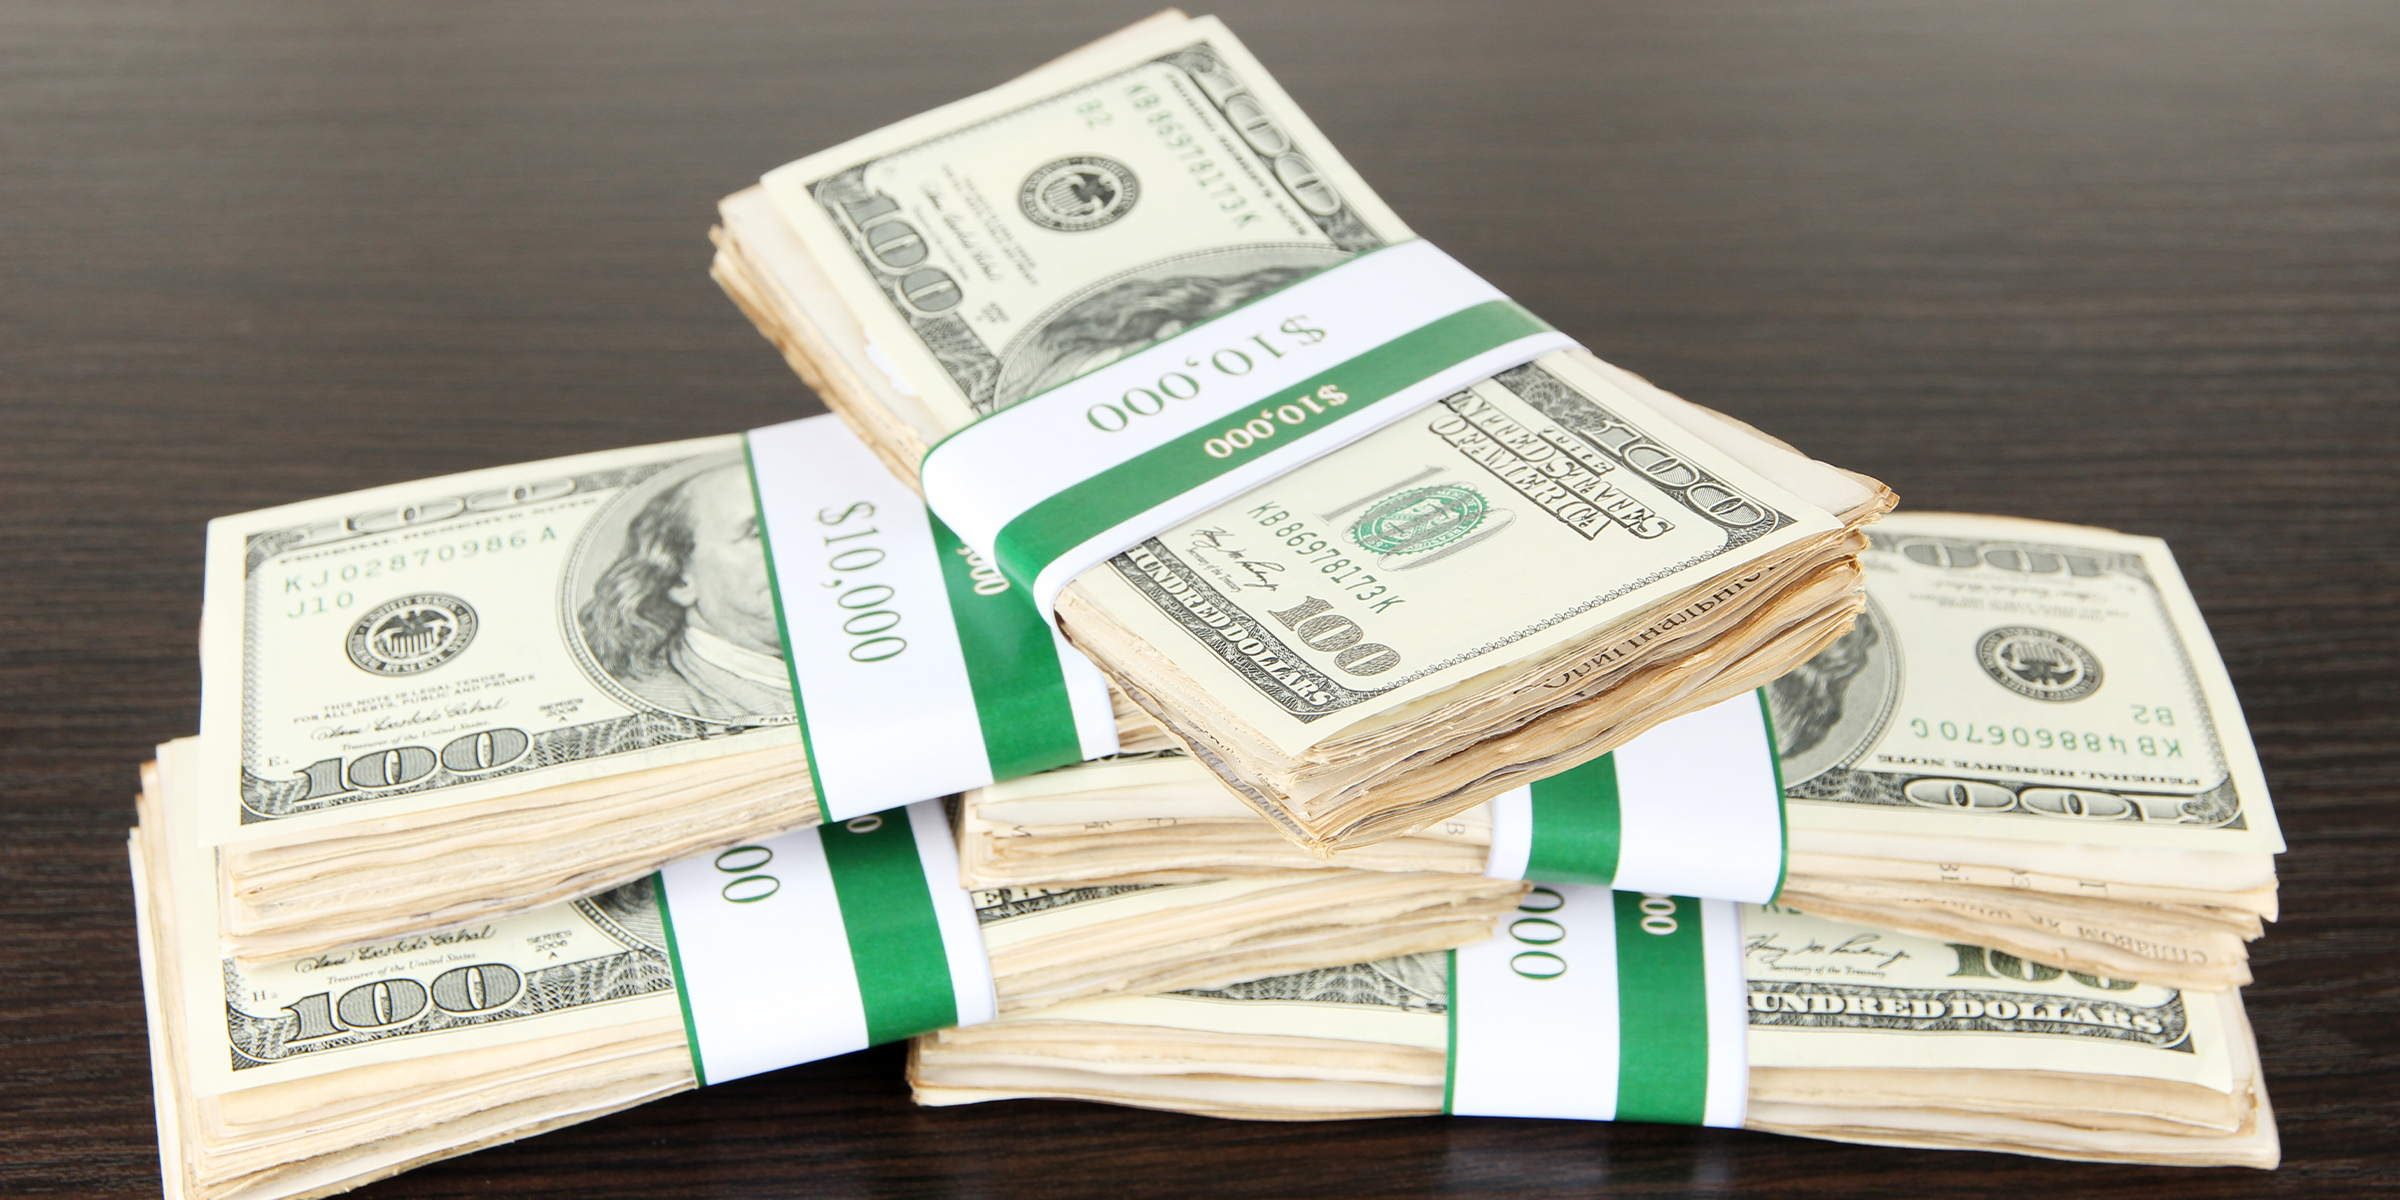 Stacks of dollar bills | Source: Shutterstock